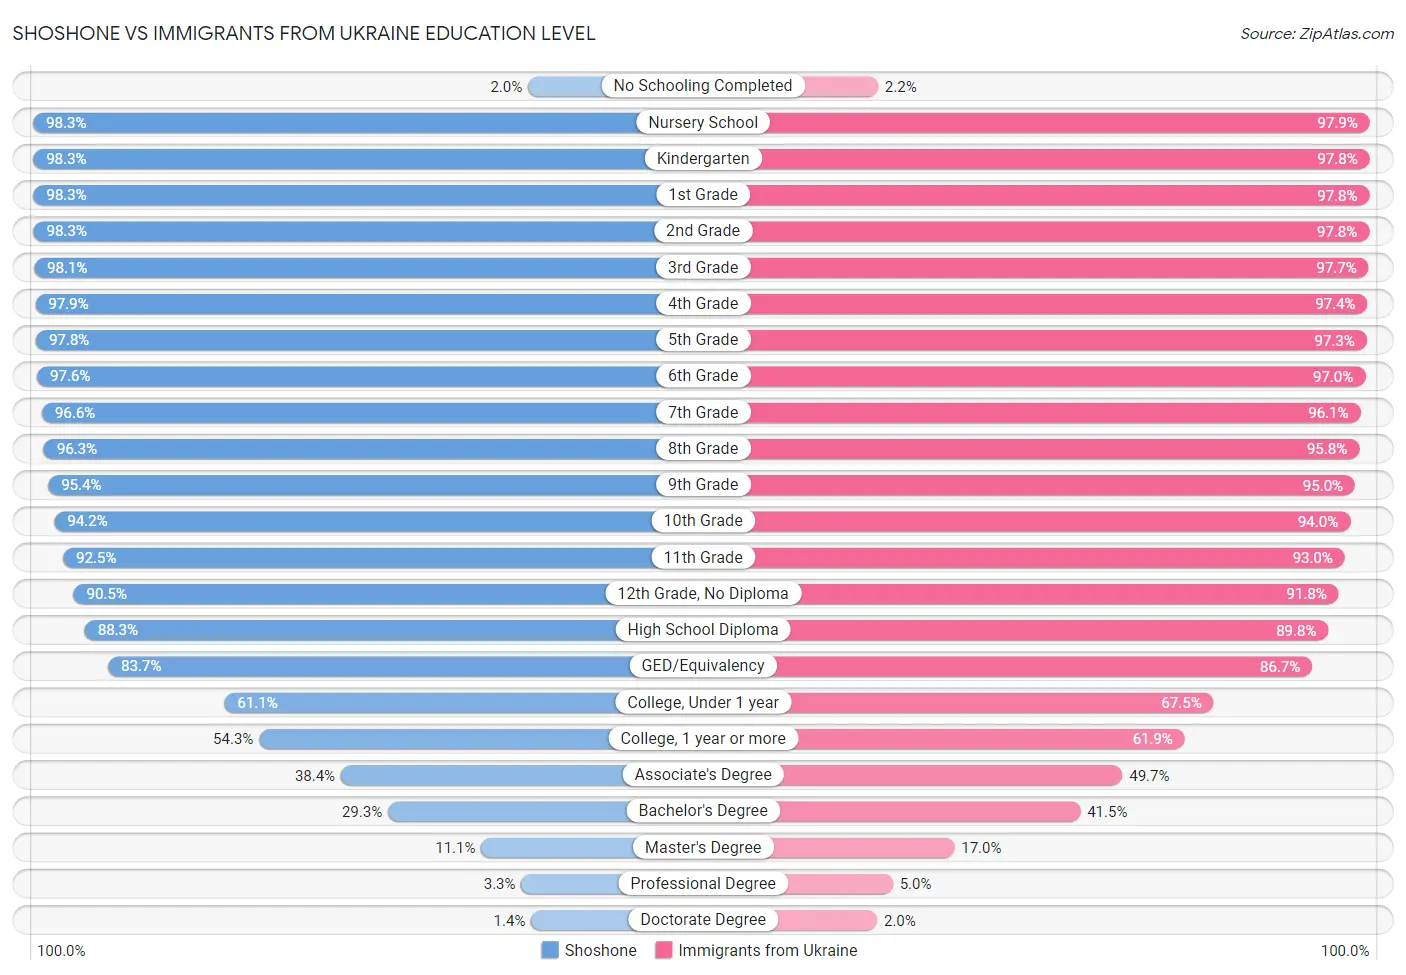 Shoshone vs Immigrants from Ukraine Education Level